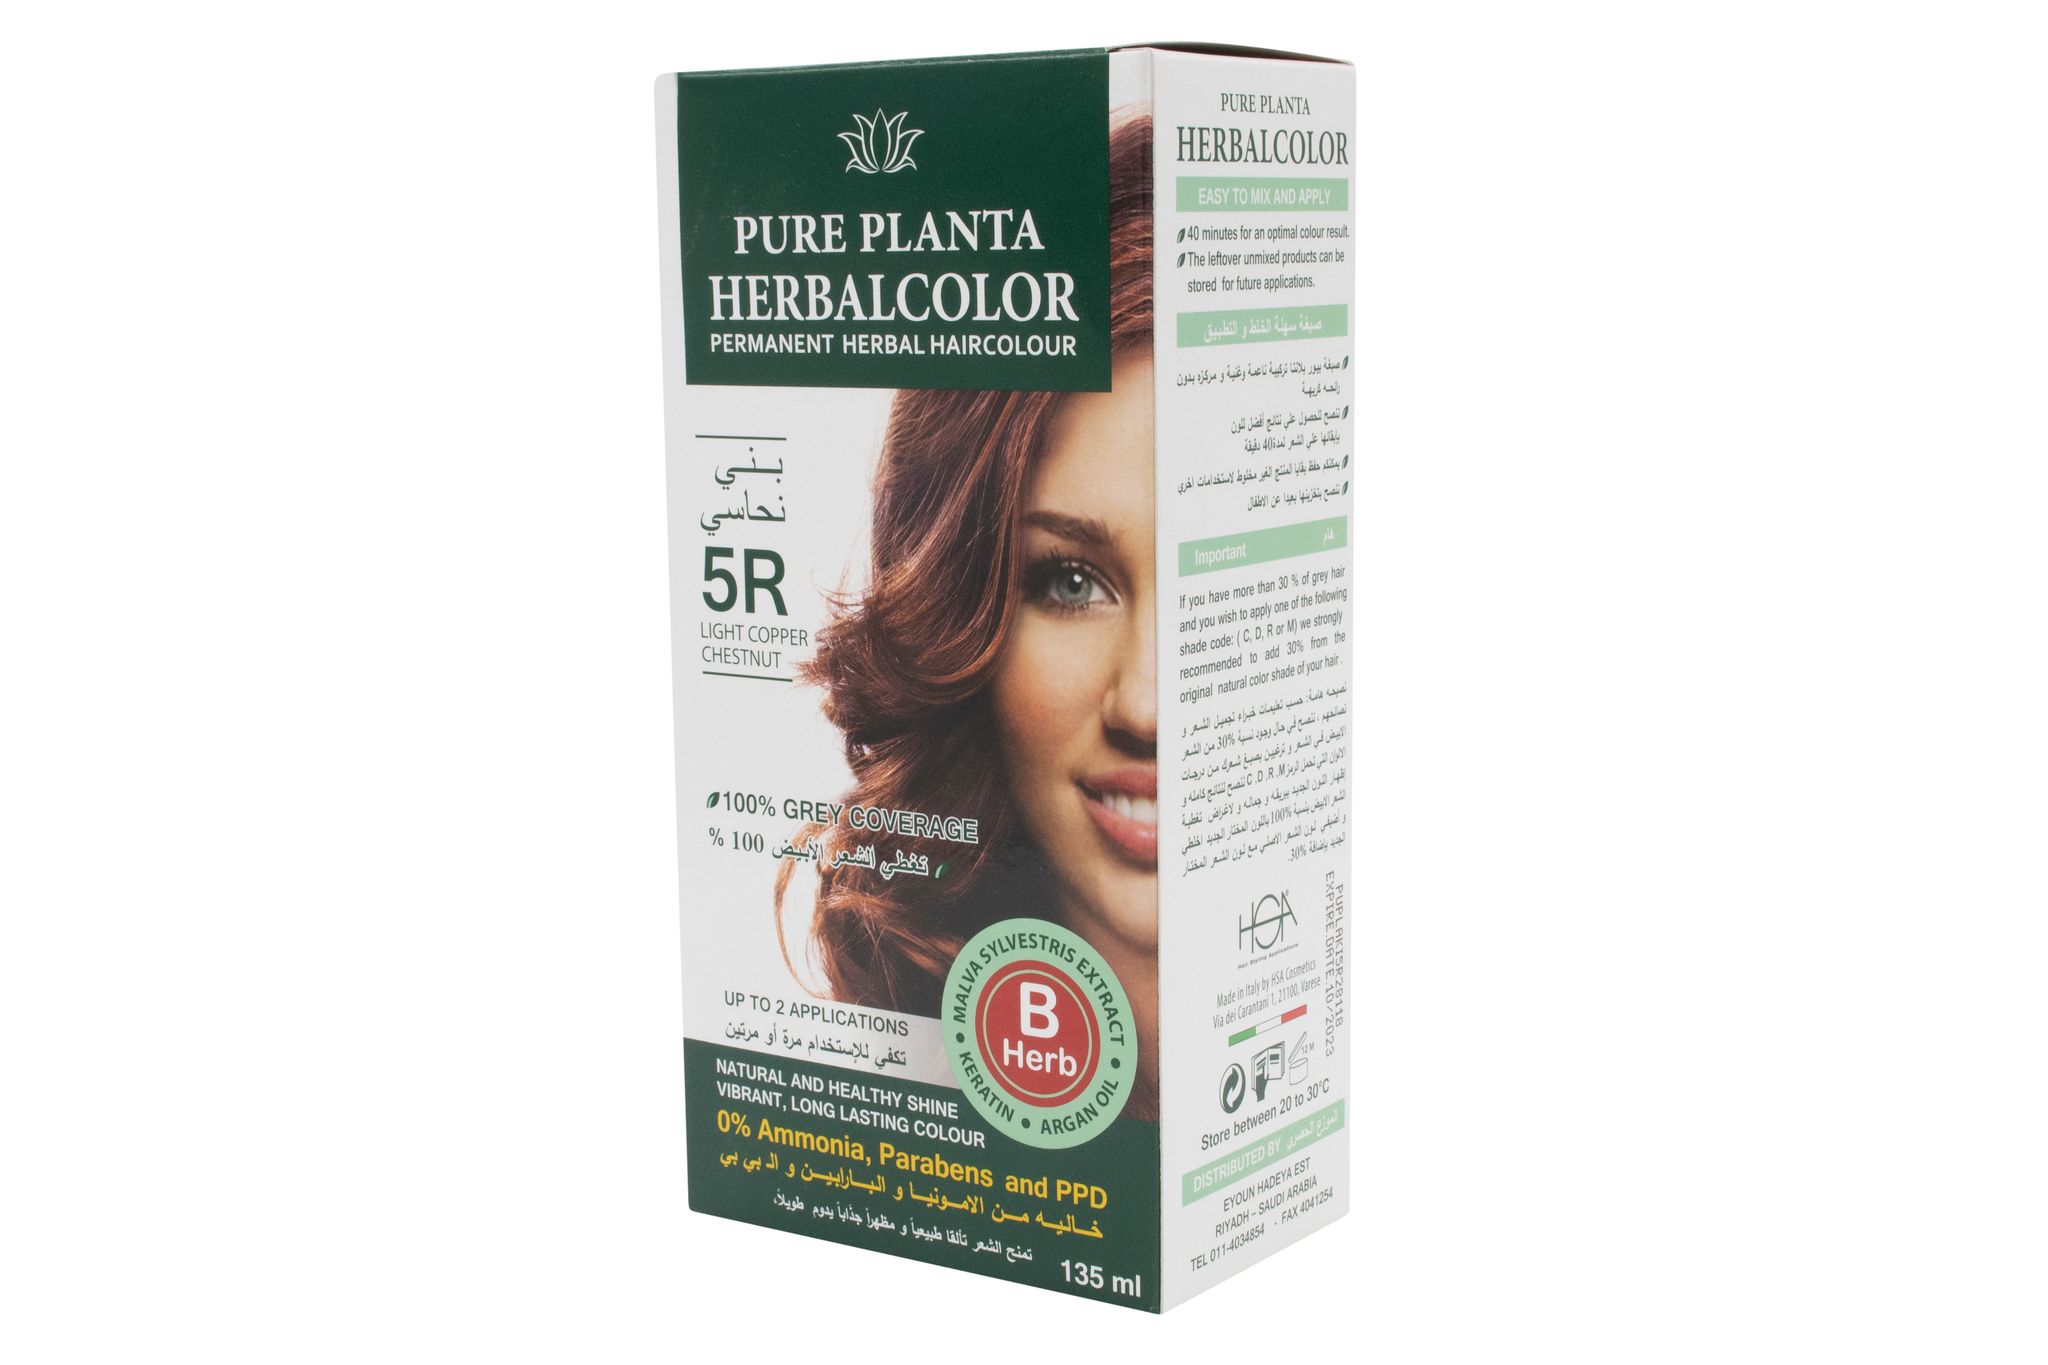 Herbal Hair Color Gel 5R Light Copper Chestnut